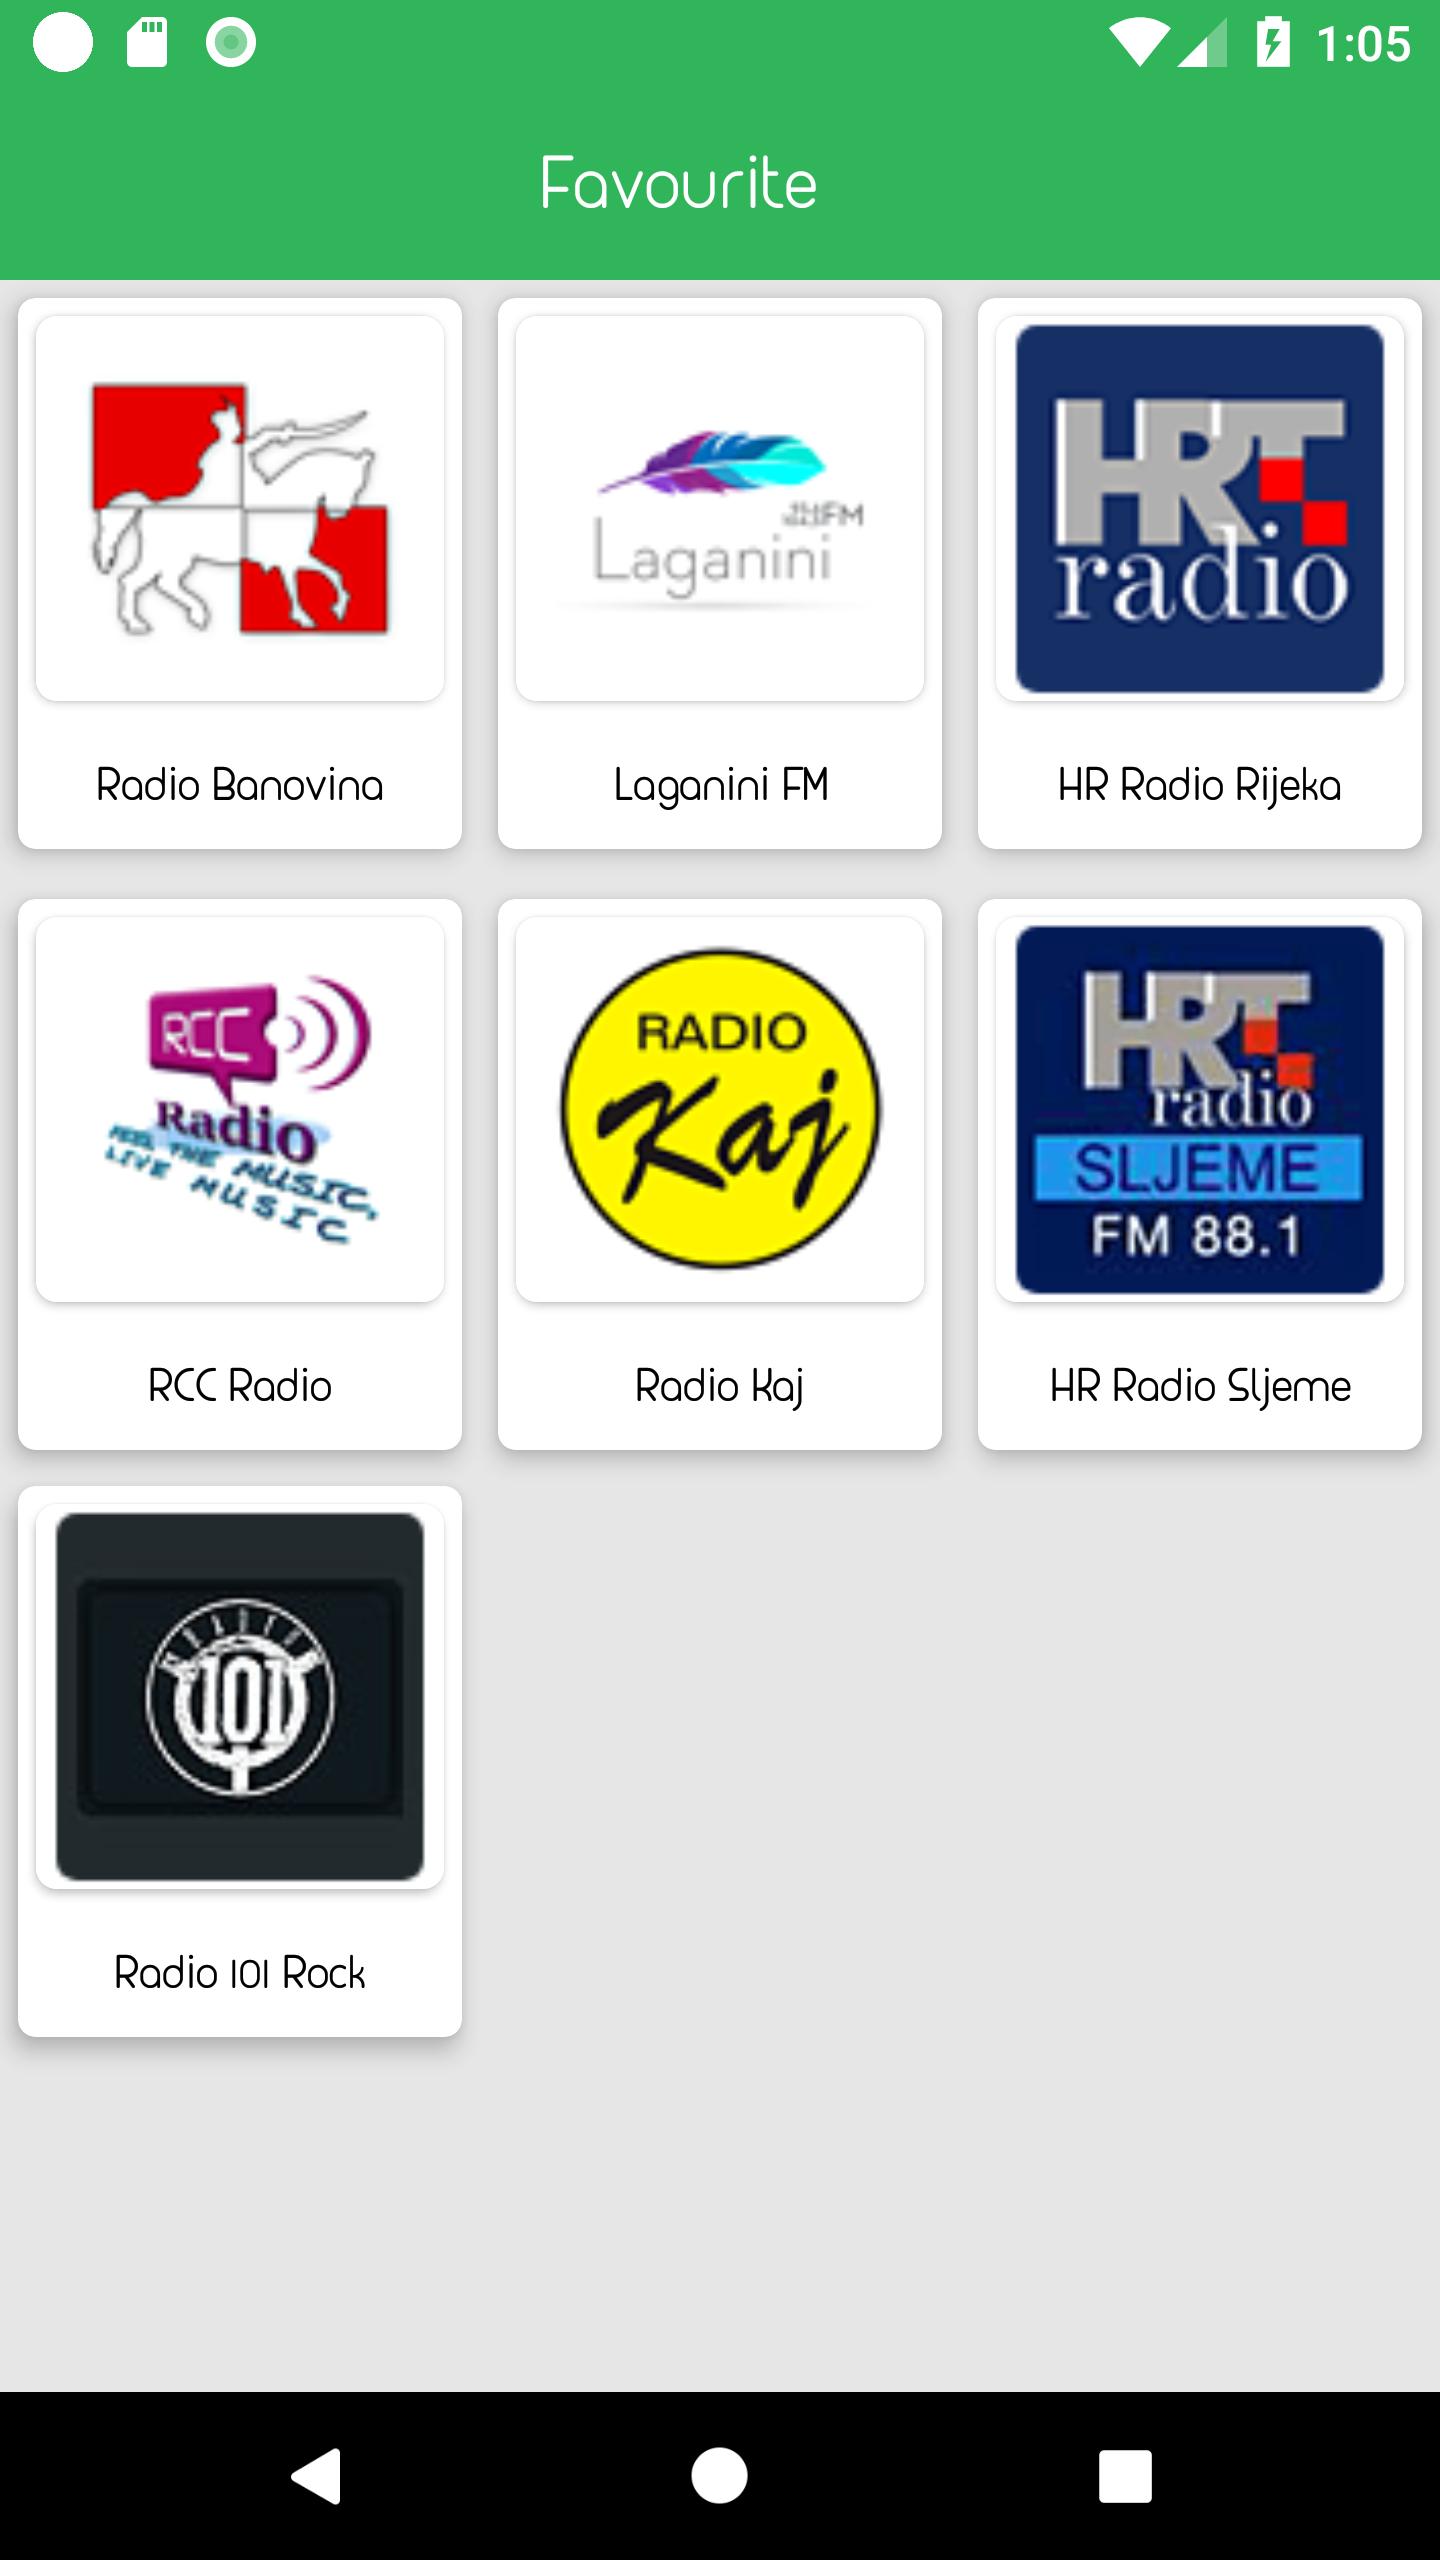 Croatia Radio for Android - APK Download